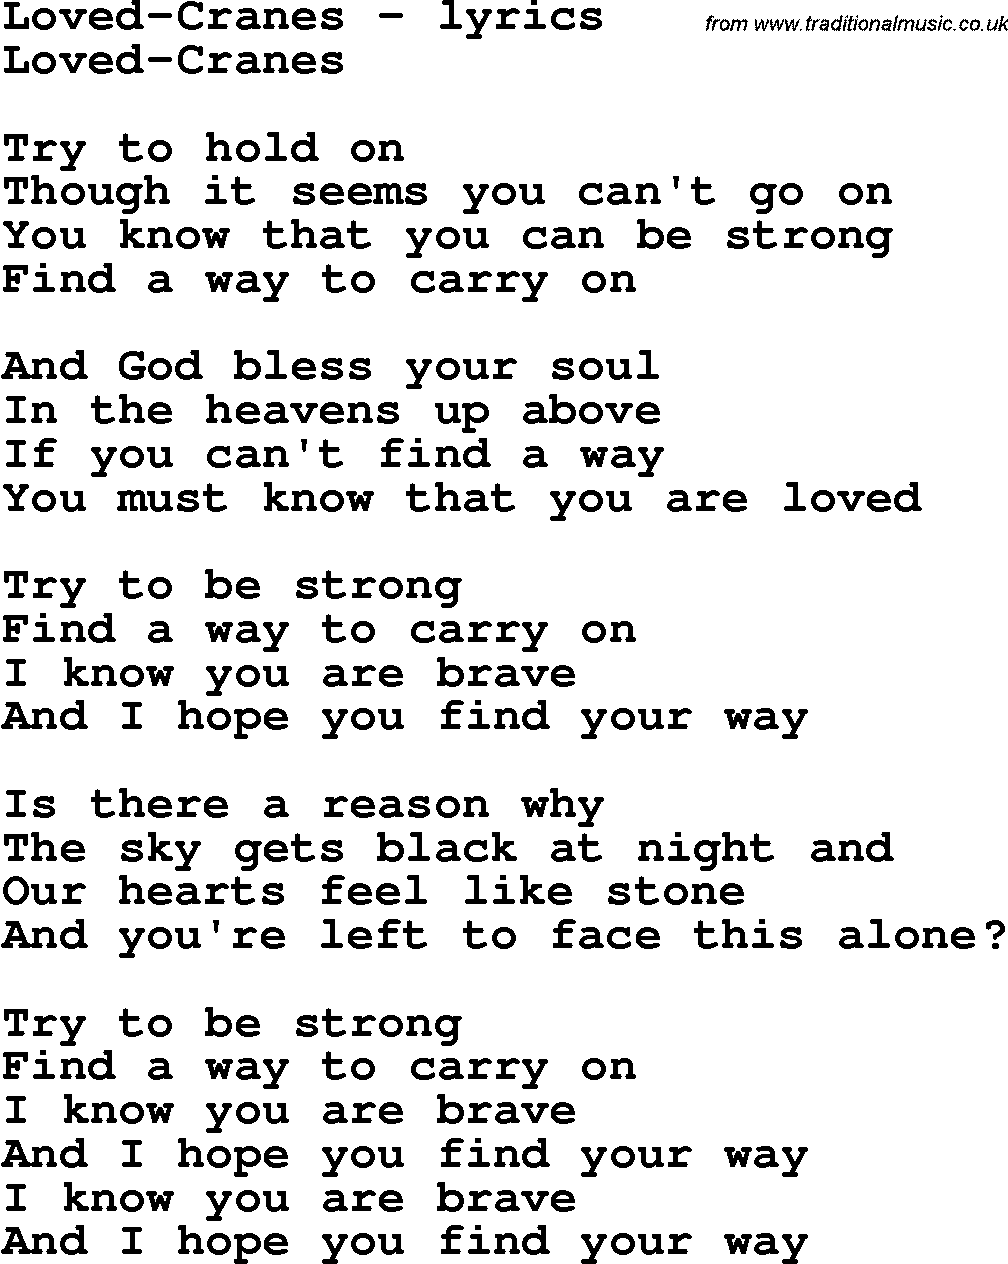 Love Song Lyrics for: Loved-Cranes